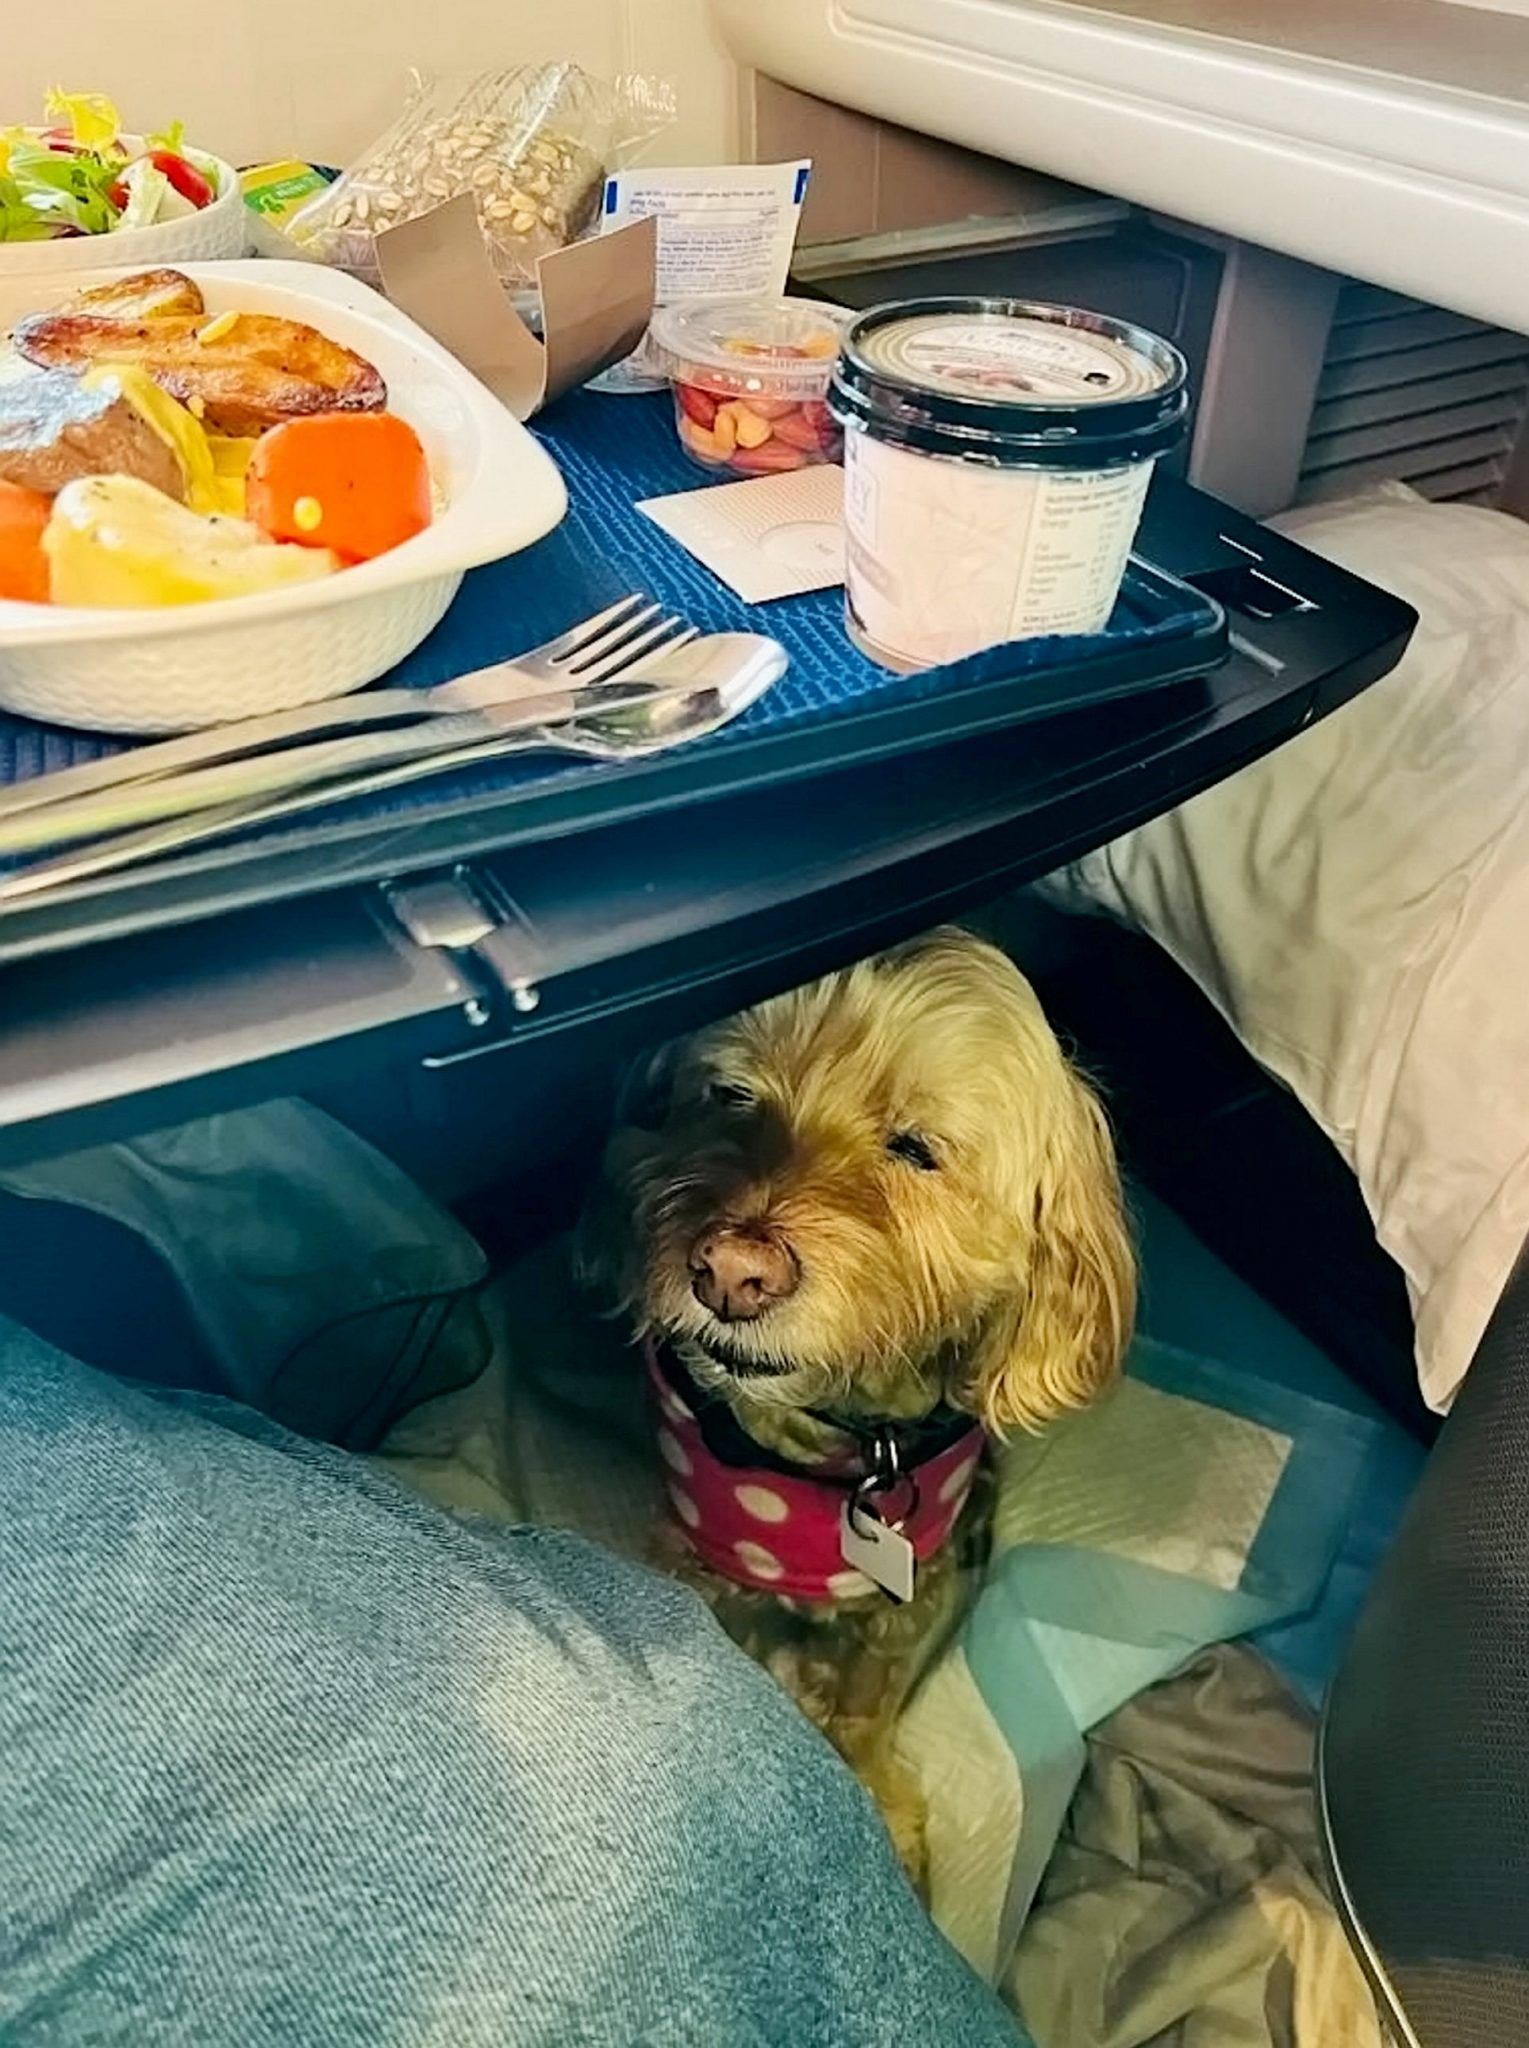 Hula getting some shut eye on the plane